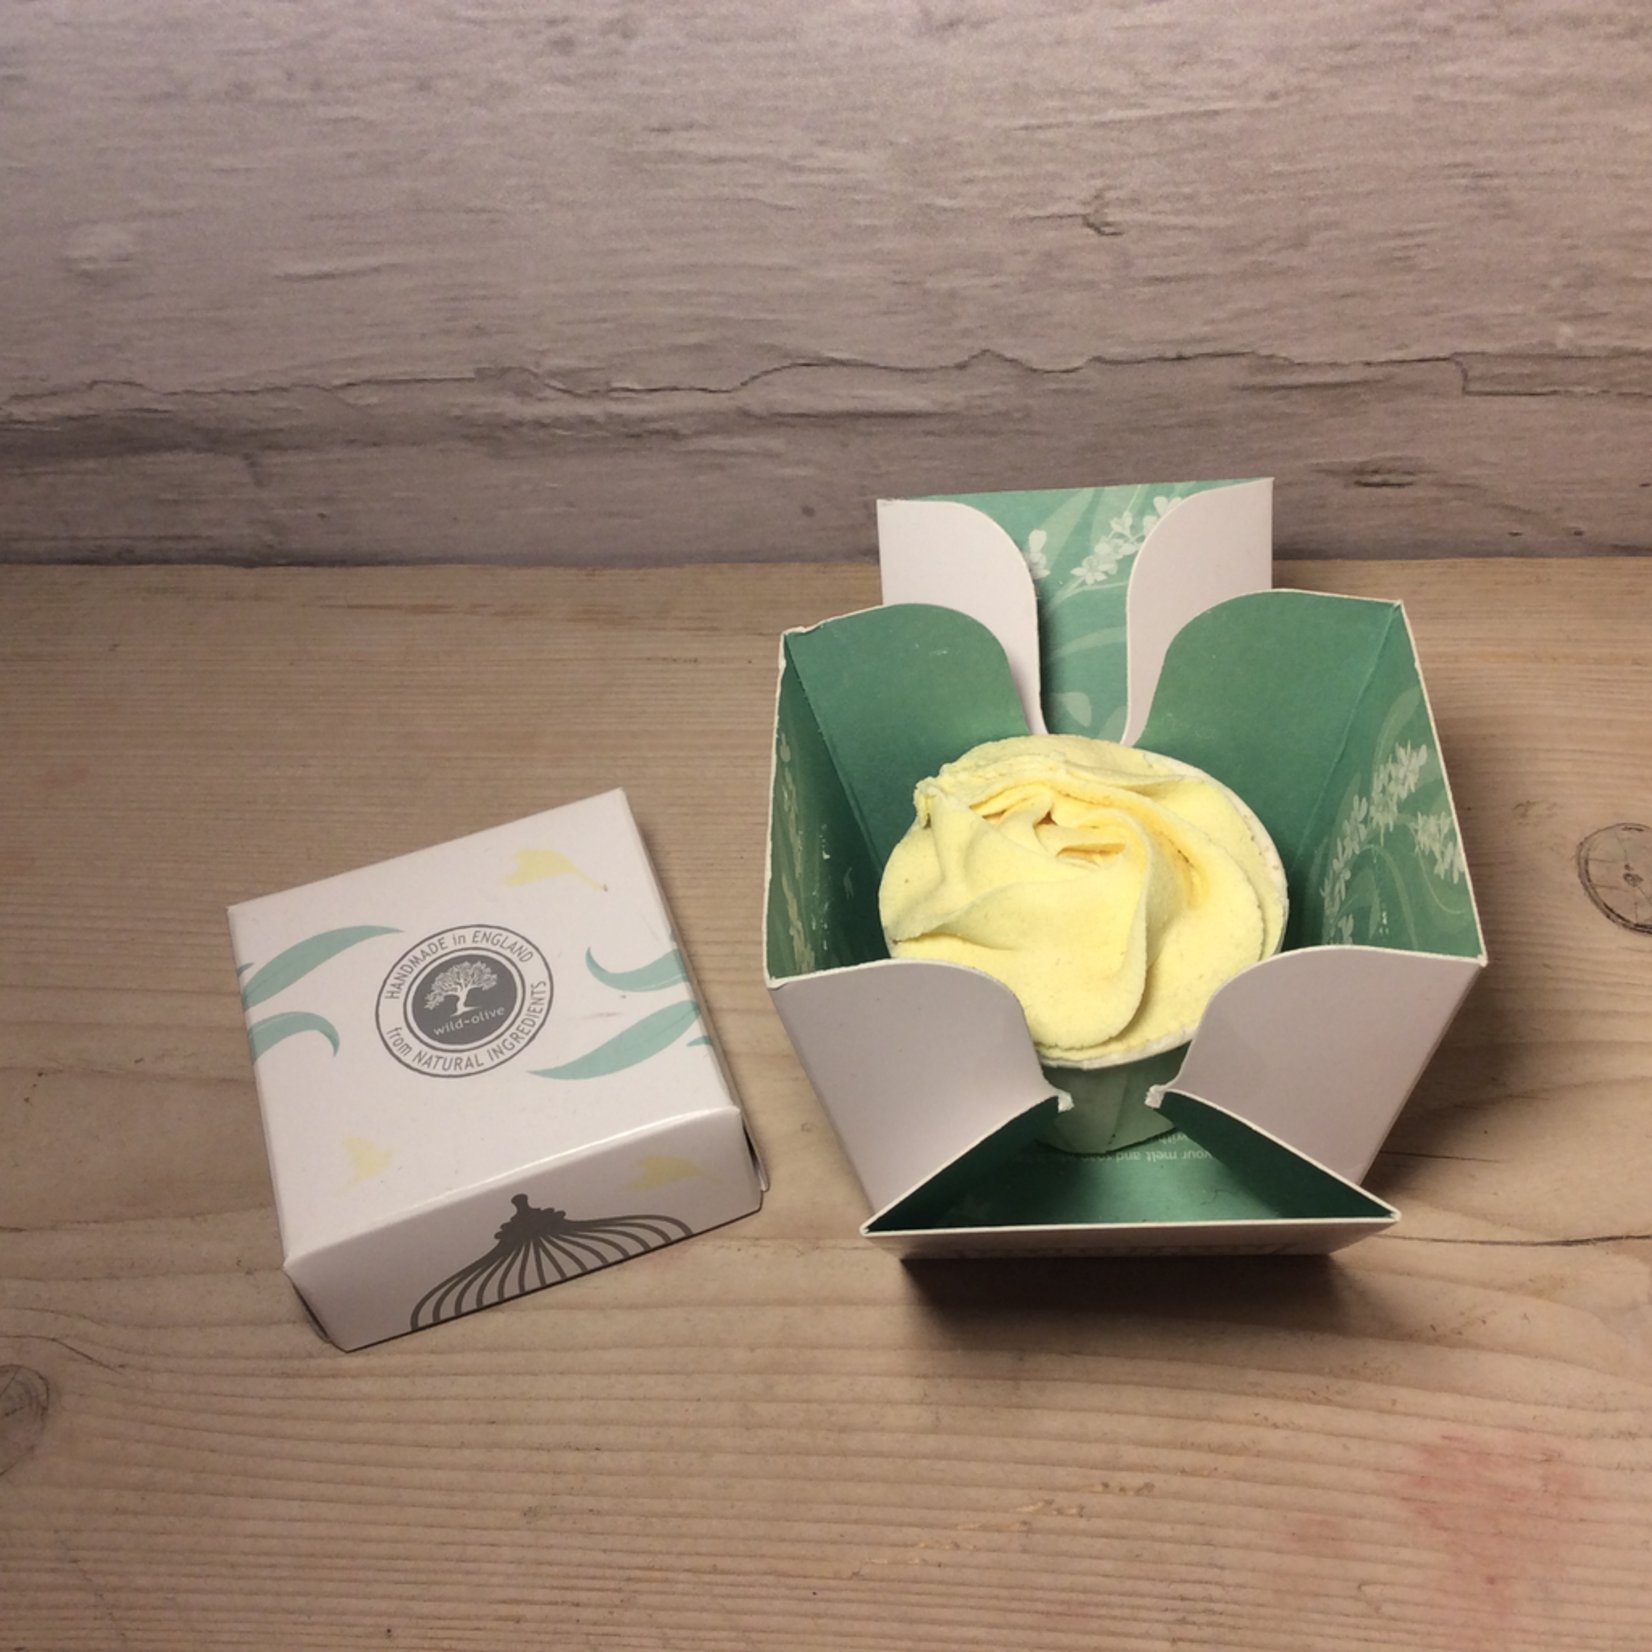 Wild Olive Wild Olive Luxury Boxed Lemon & Maychang Bath Melt With Surprise soap Inside